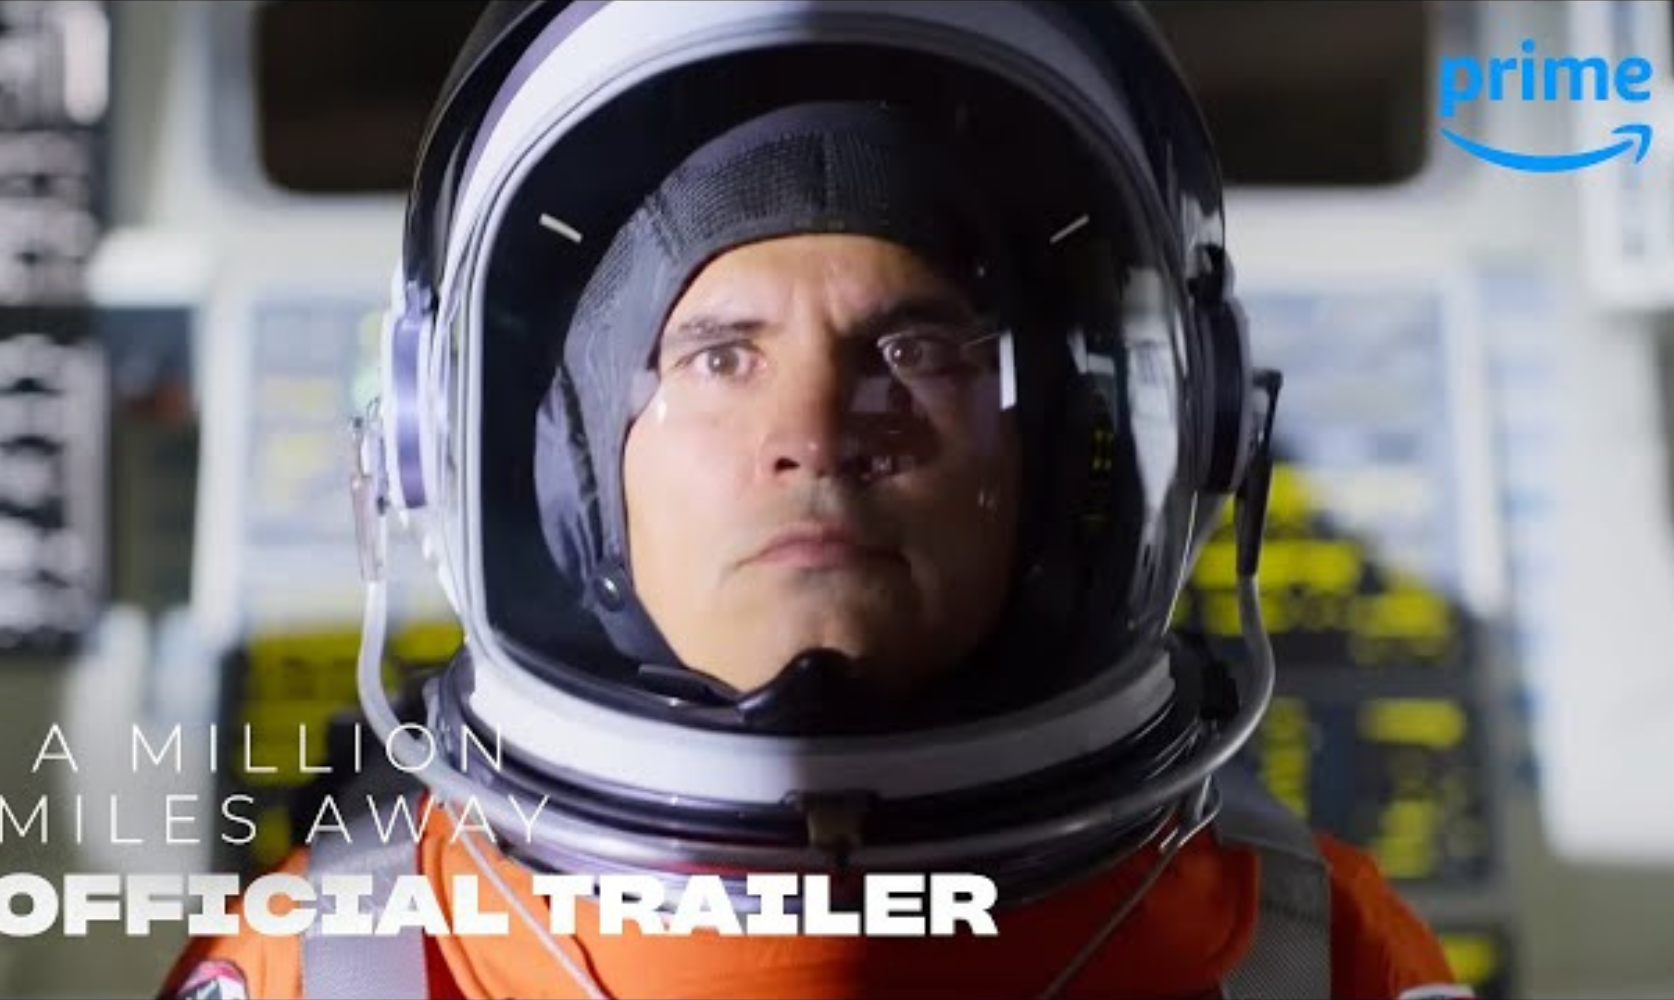 José Hernández: De campesino a astronauta, la inspiradora historia detrás de 'A Million Miles Away